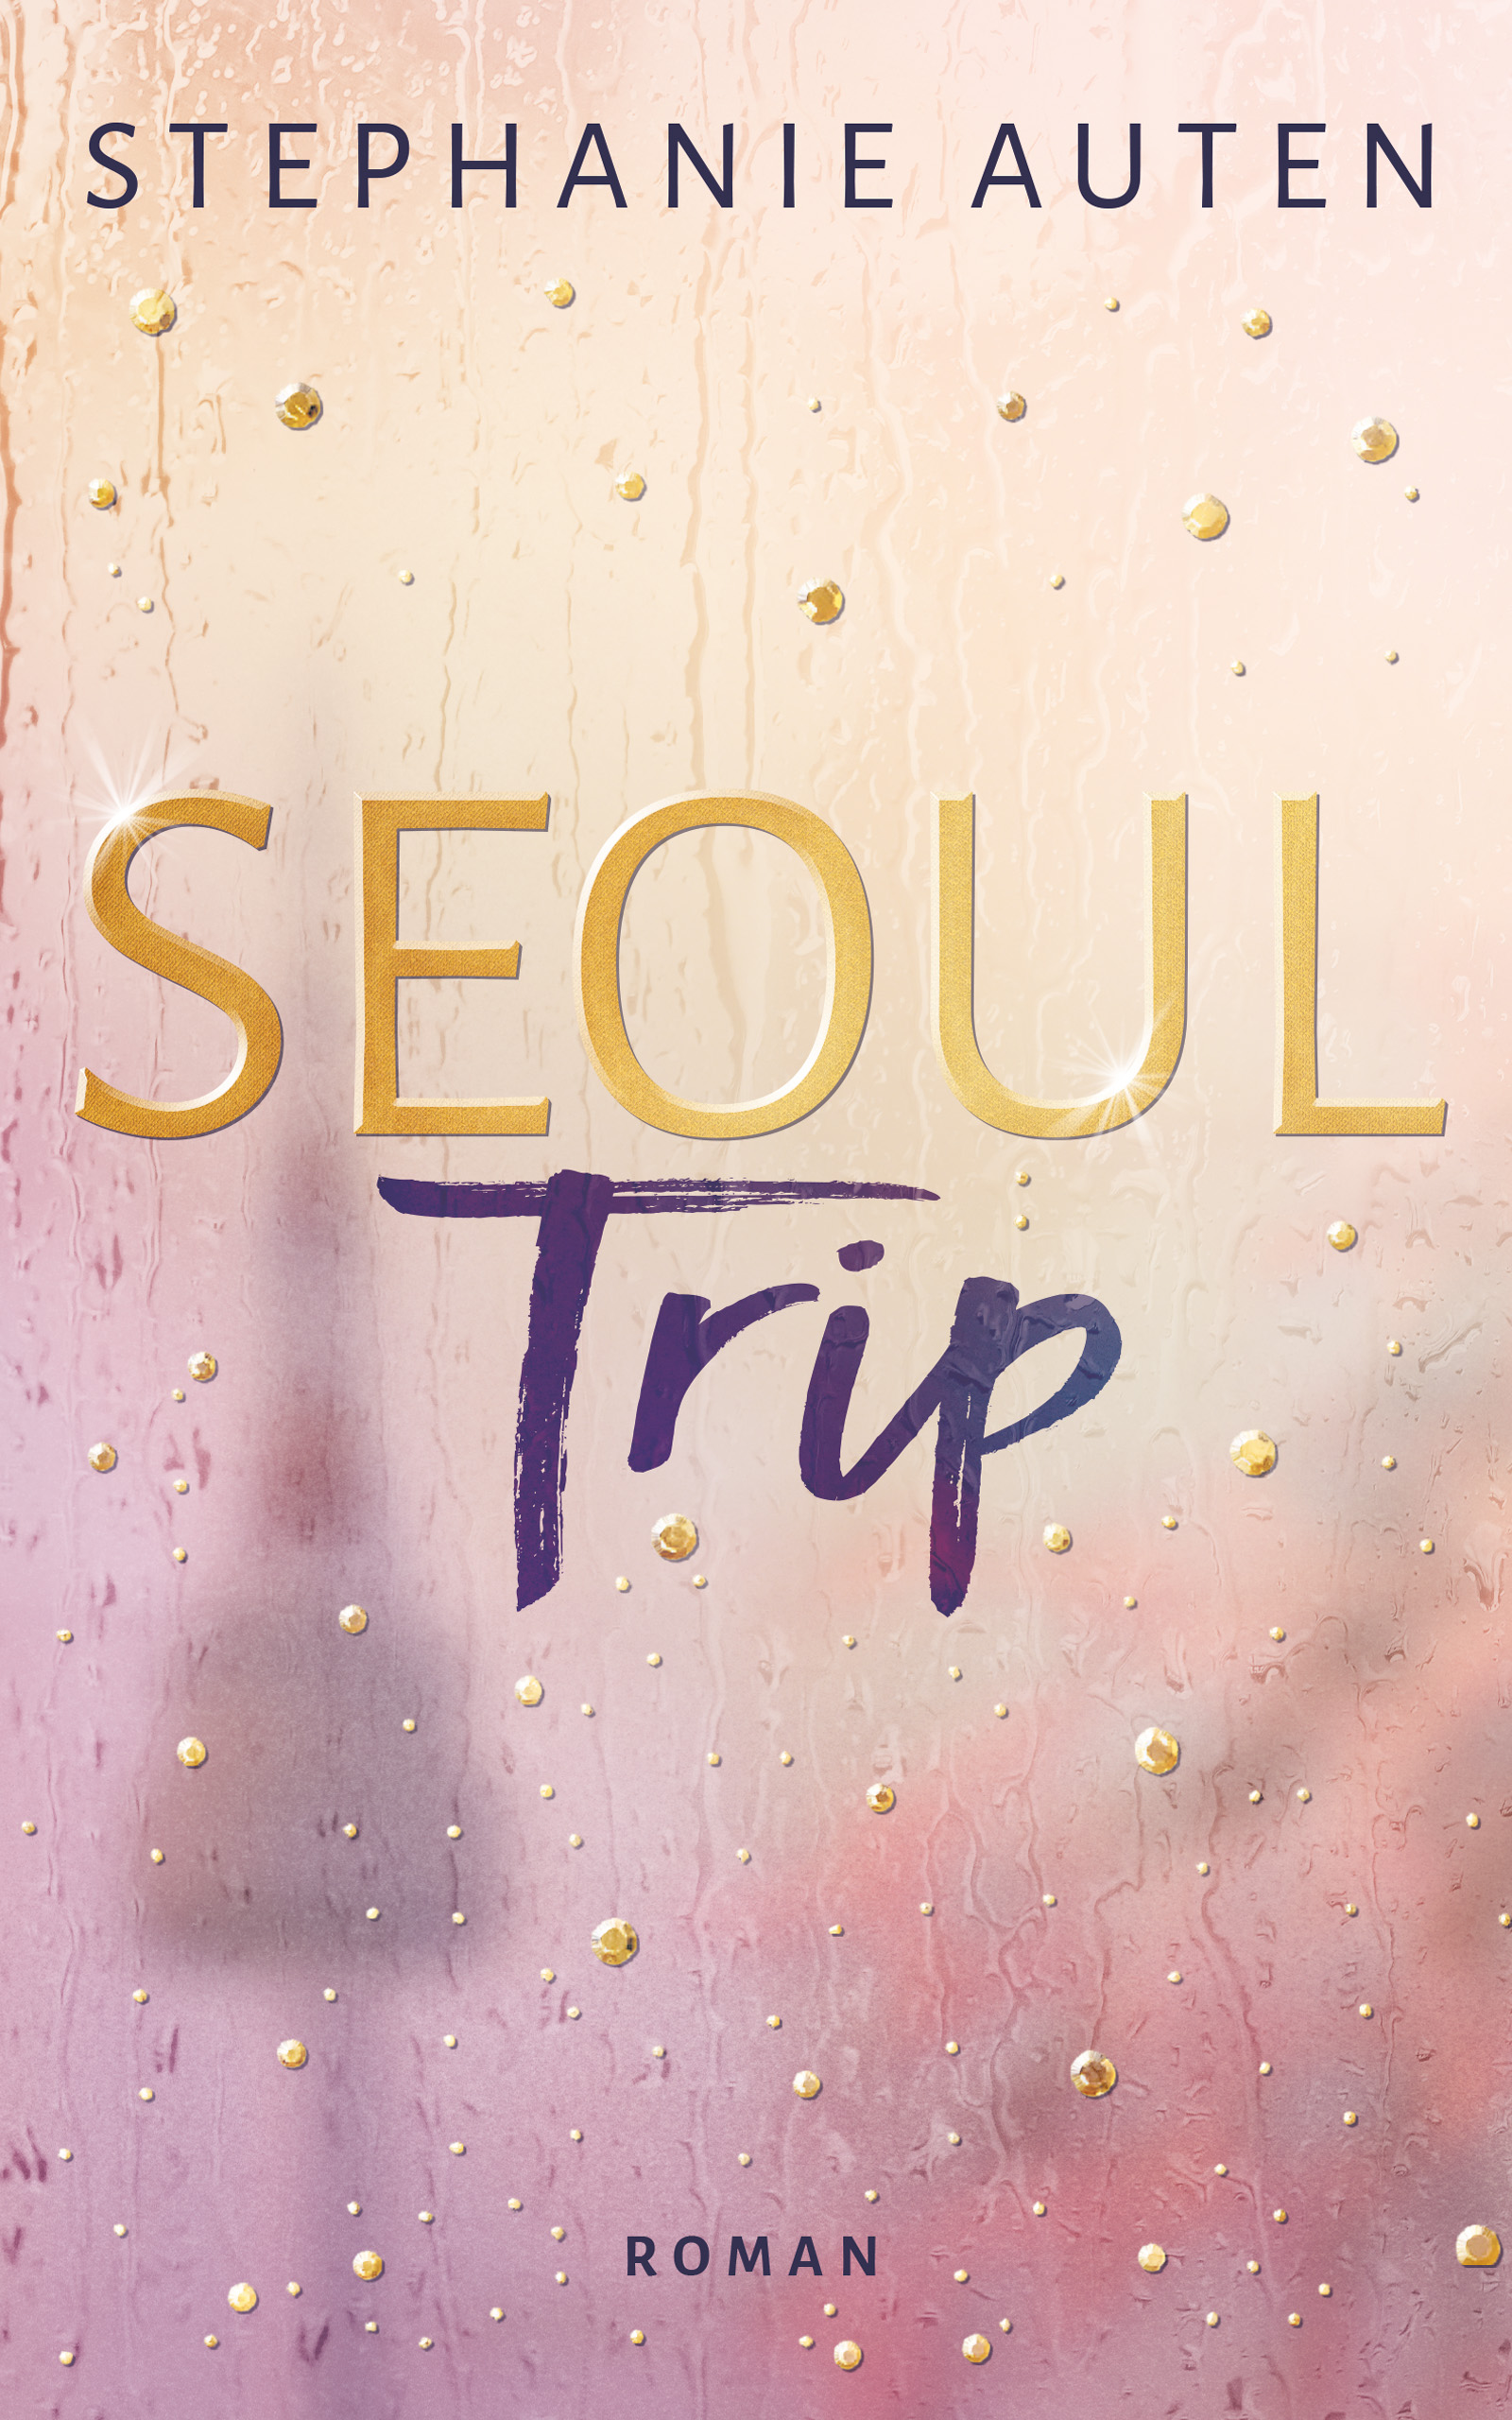 Seoul Trip